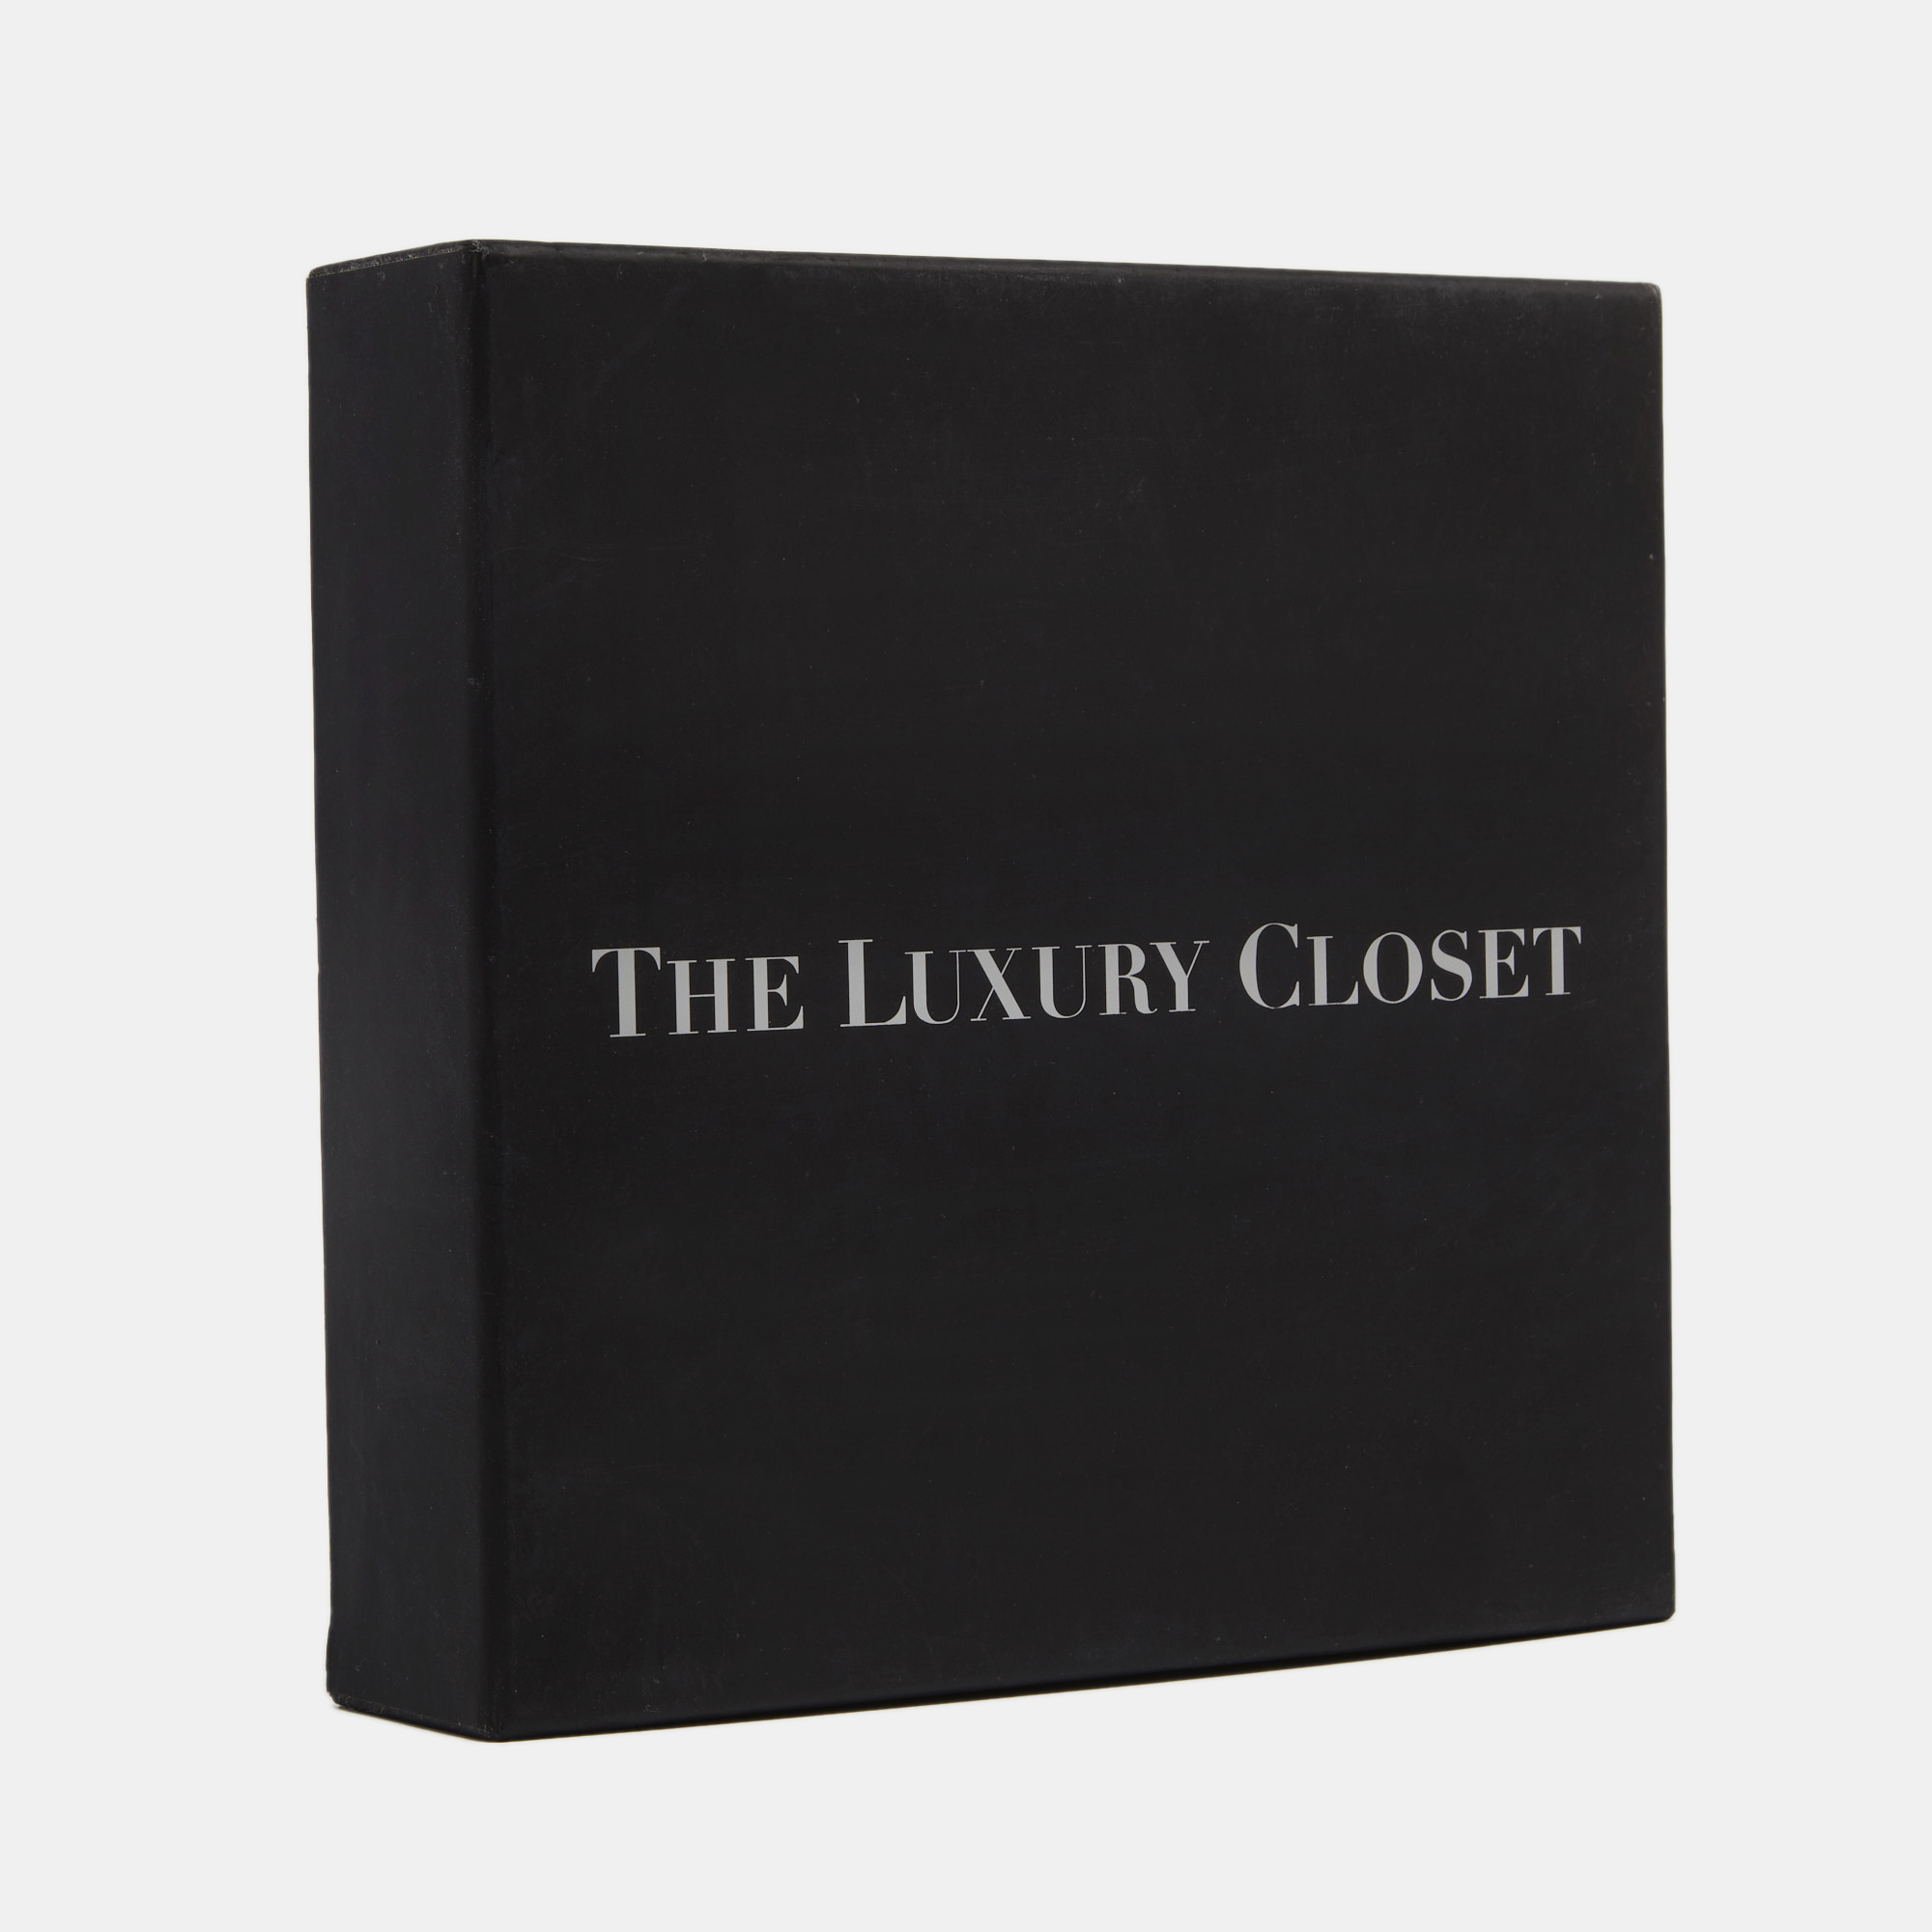 Louis Vuitton Black Mink Fur Lovely Key Holder